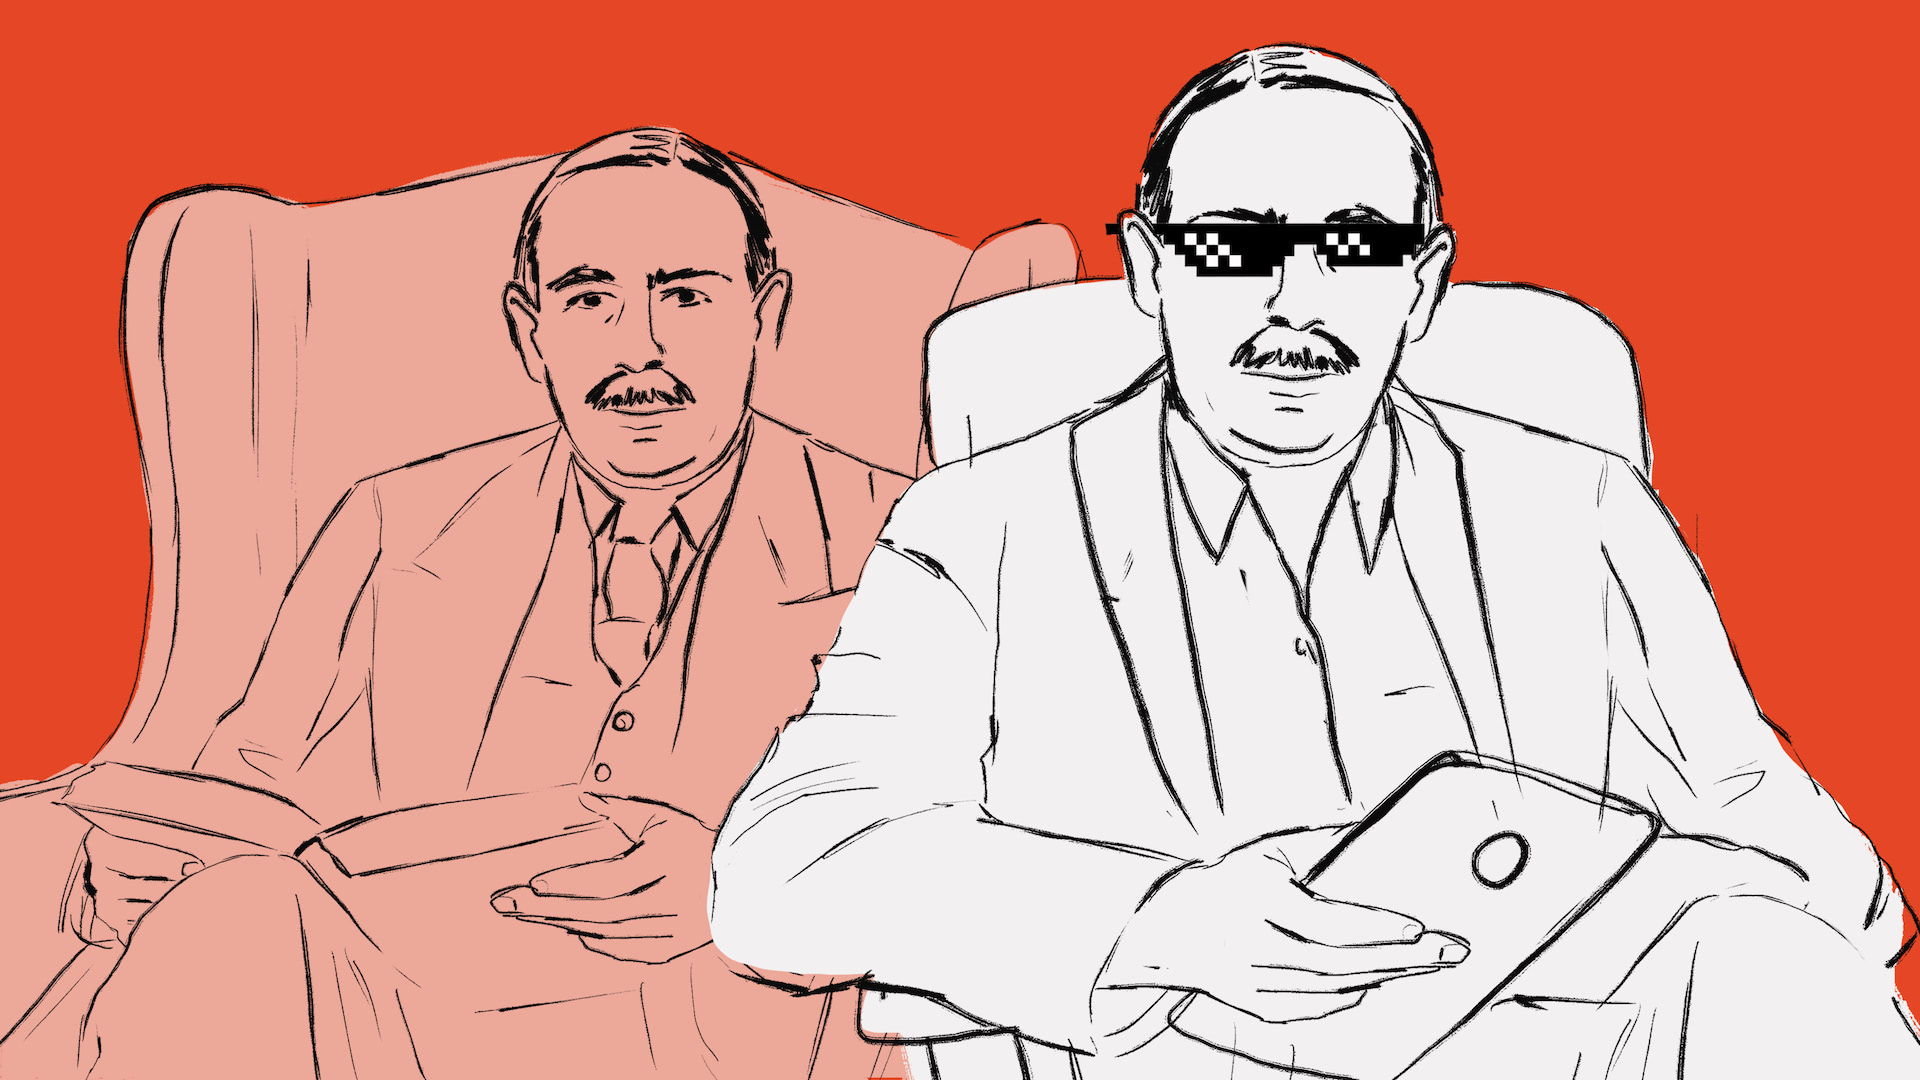 Hand drawn illustration of John Maynard Keynes with sunglasses and a tablet